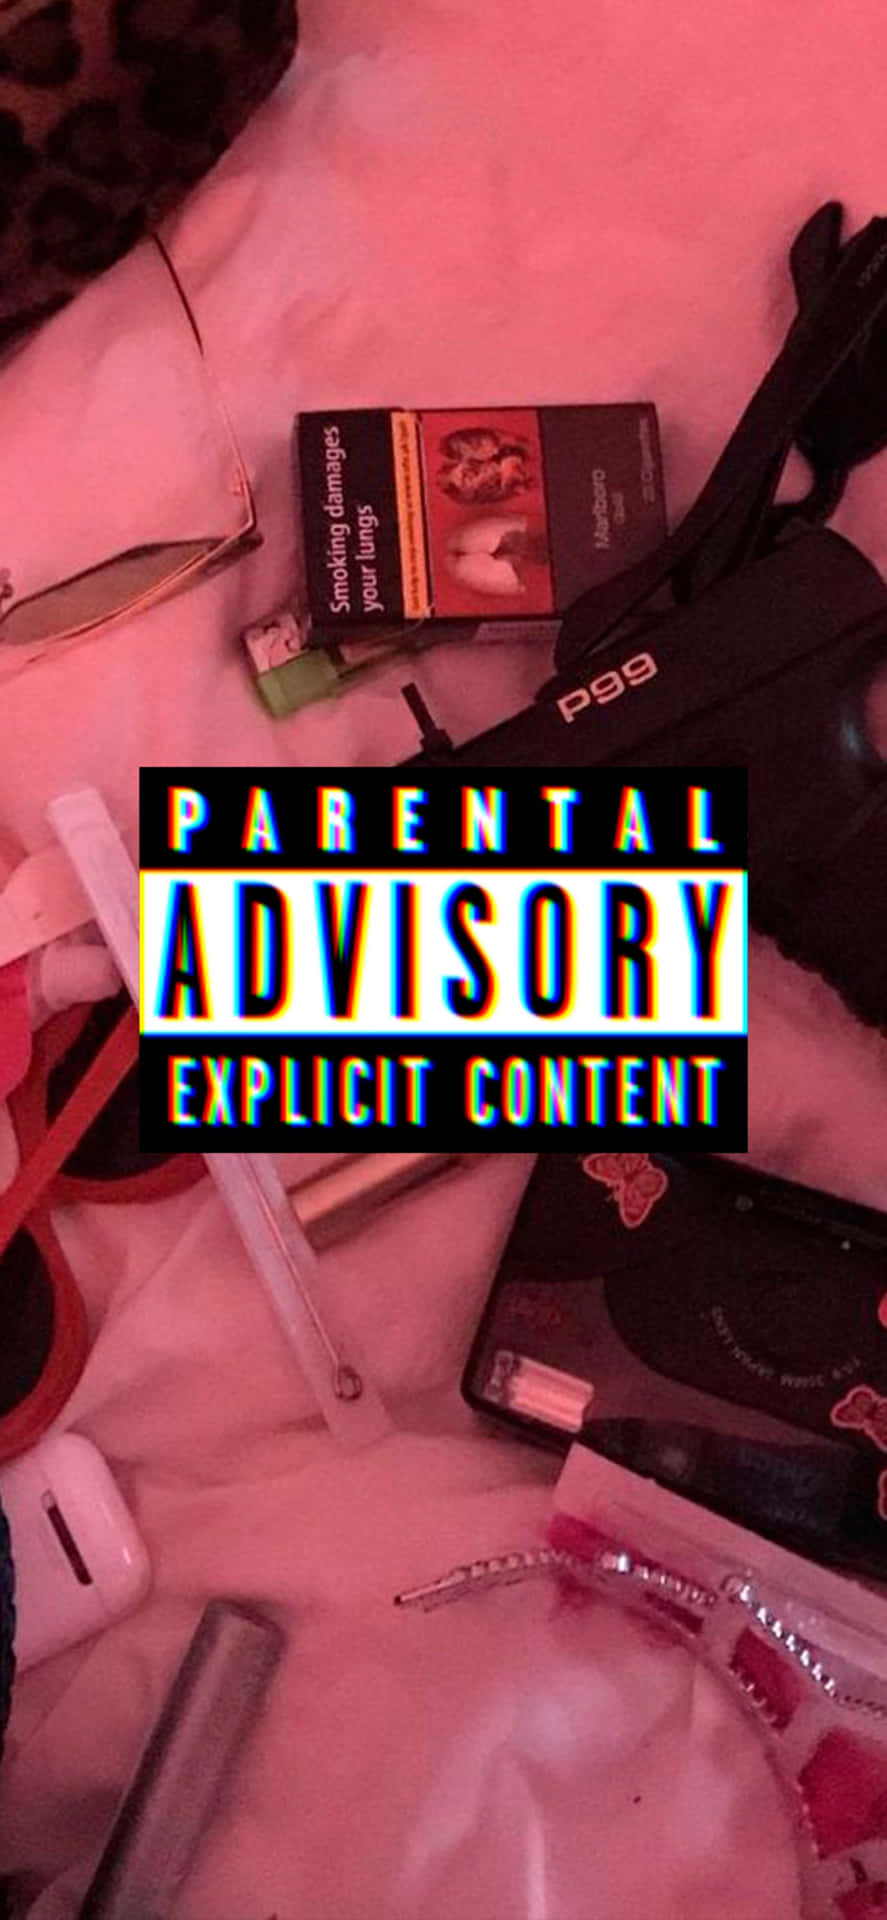 Download Baddie Explicit Advisory